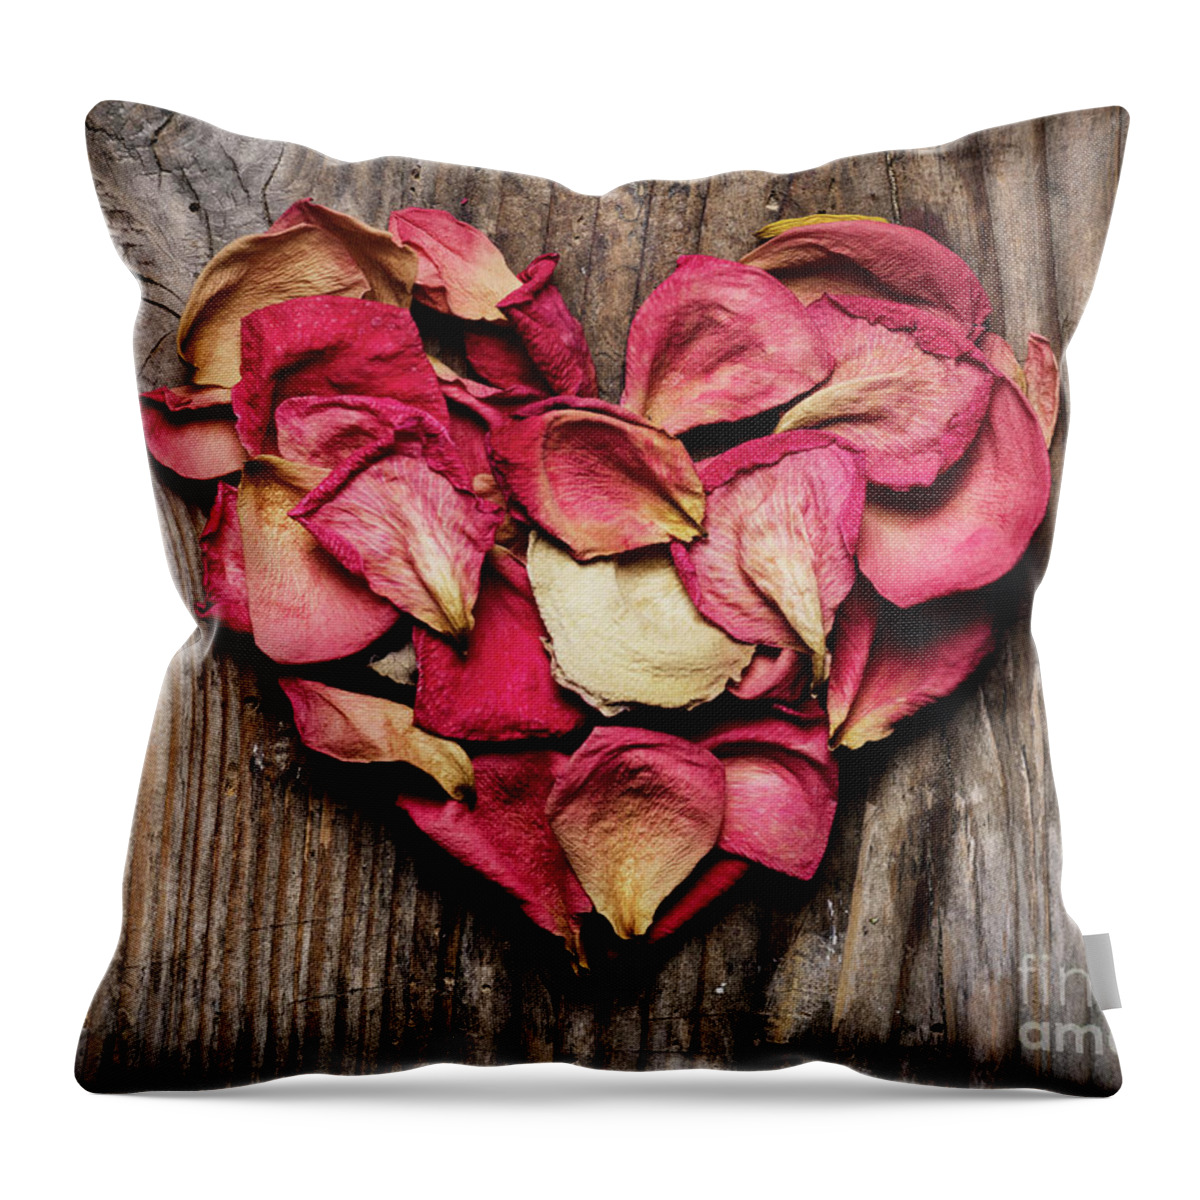 Heart Throw Pillow featuring the photograph Rose petals by Jelena Jovanovic